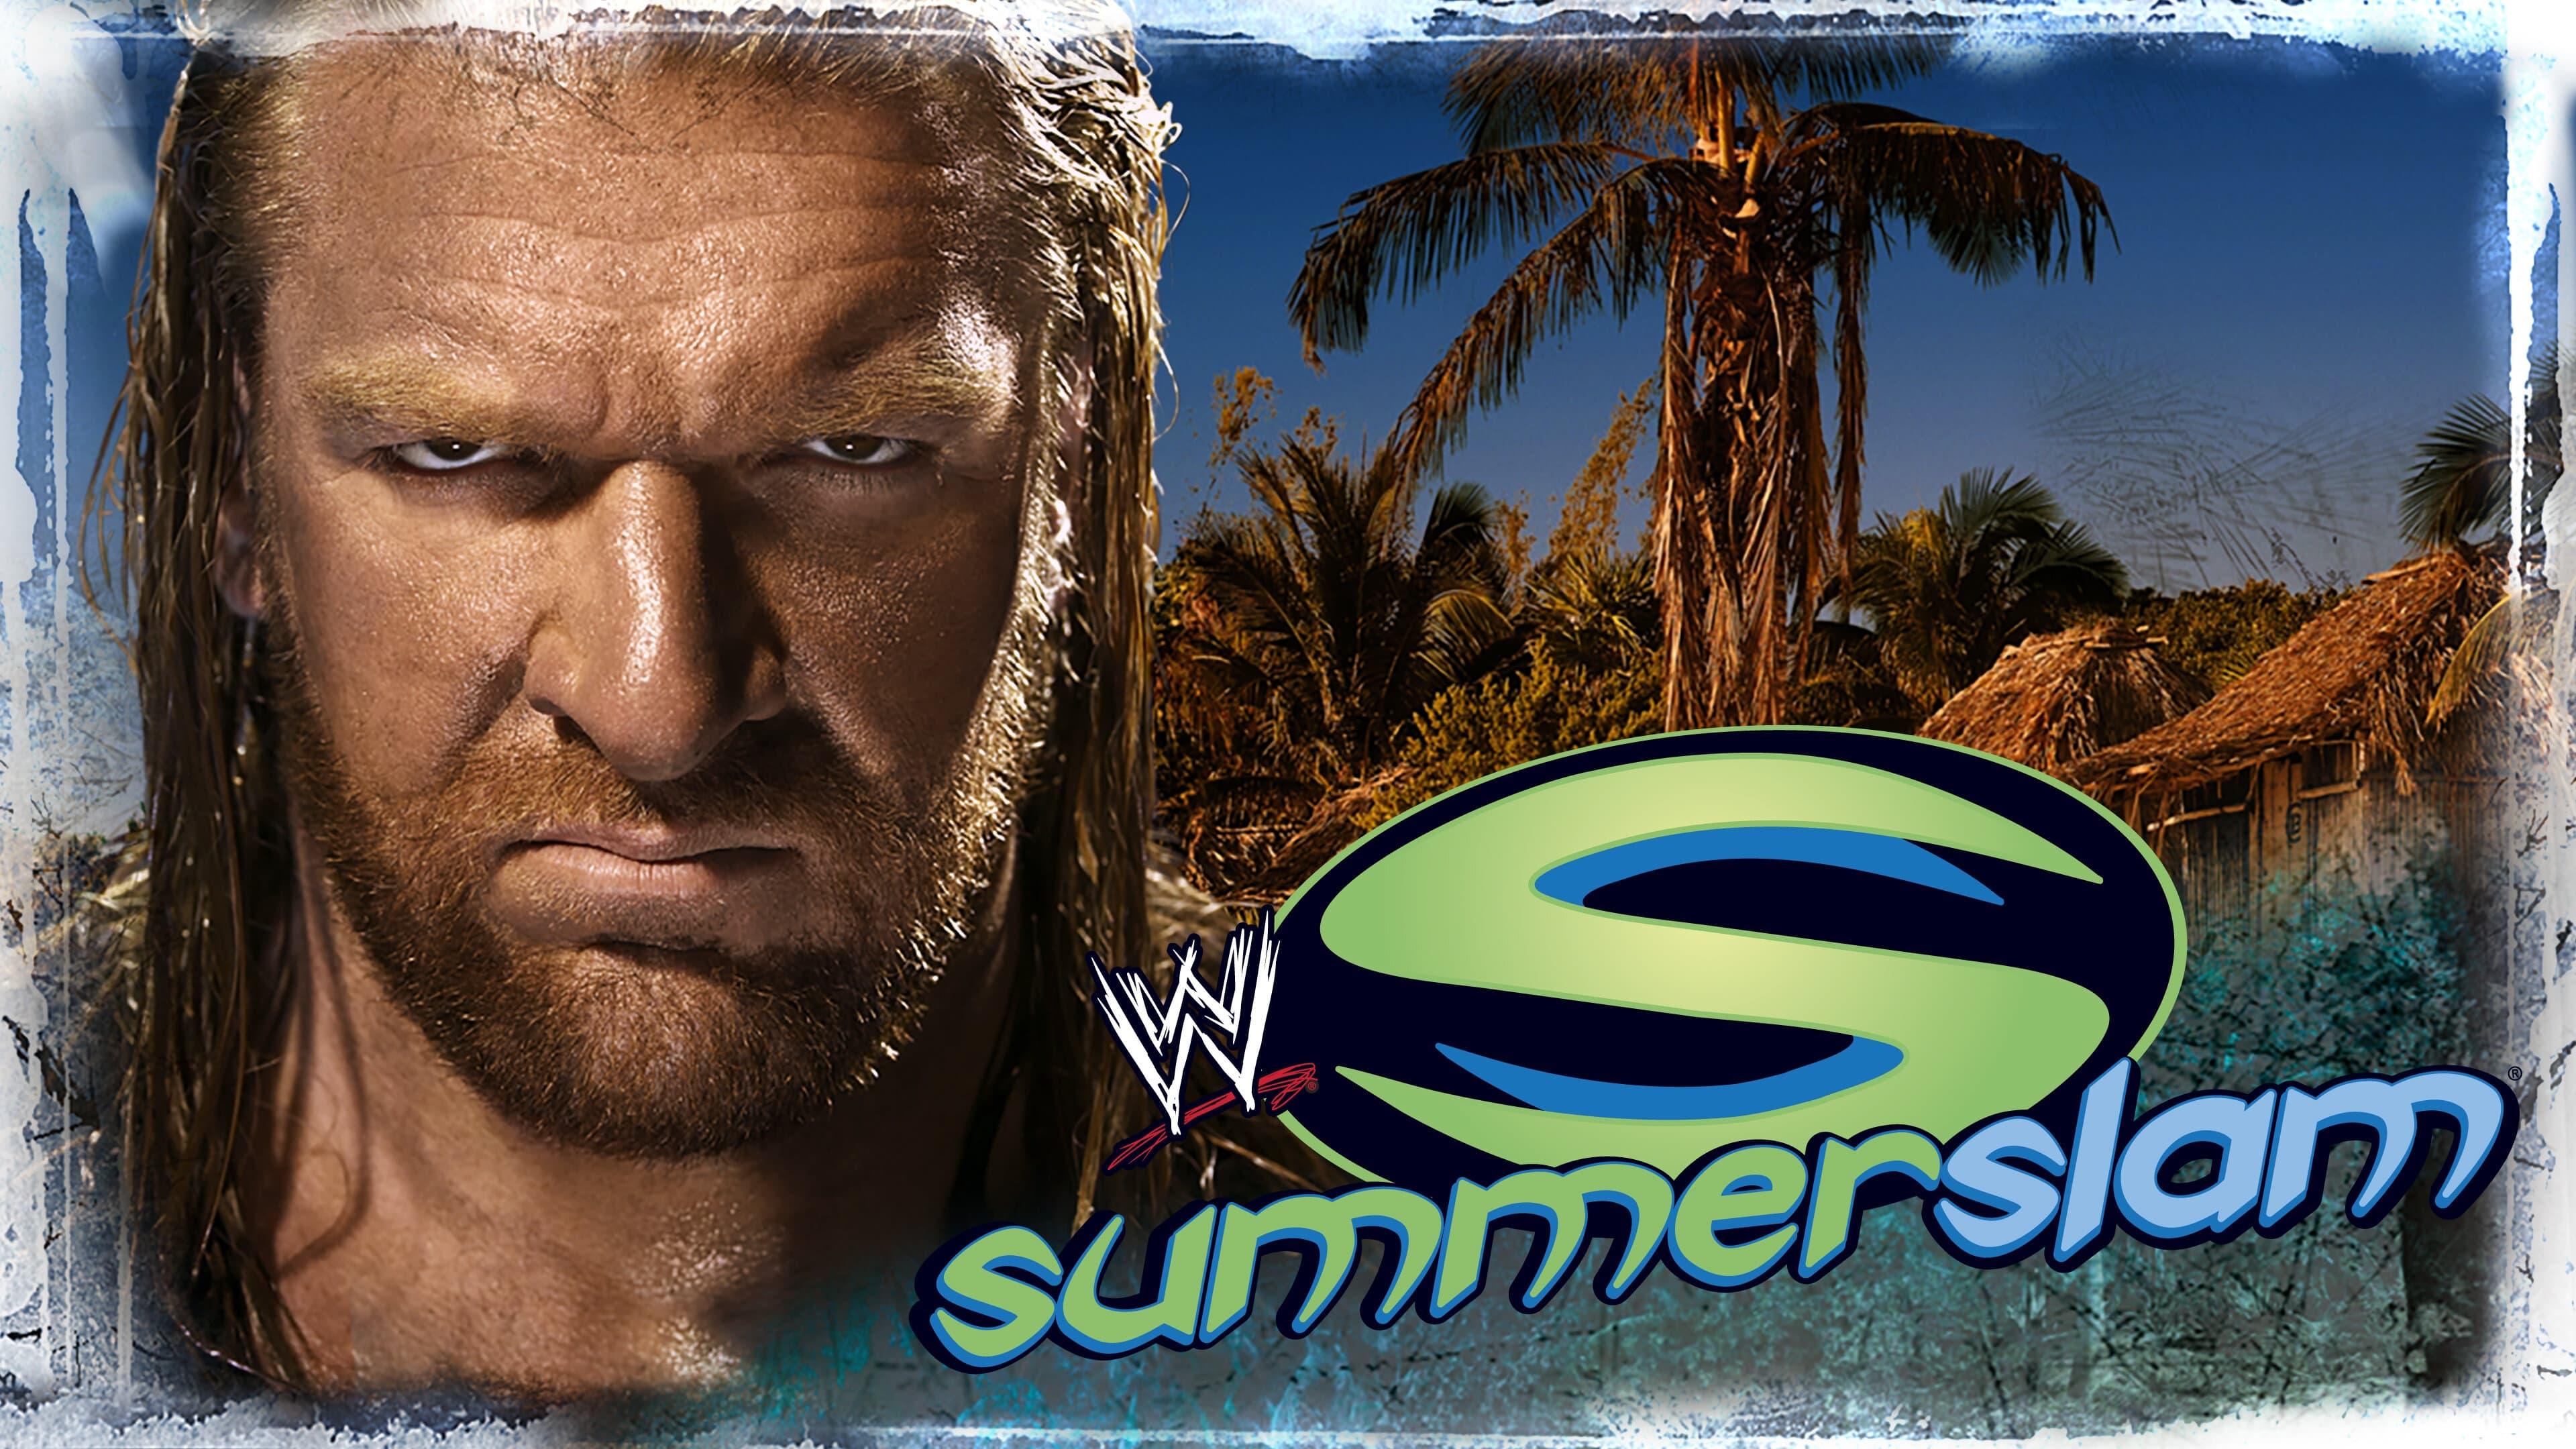 WWE SummerSlam 2007 backdrop